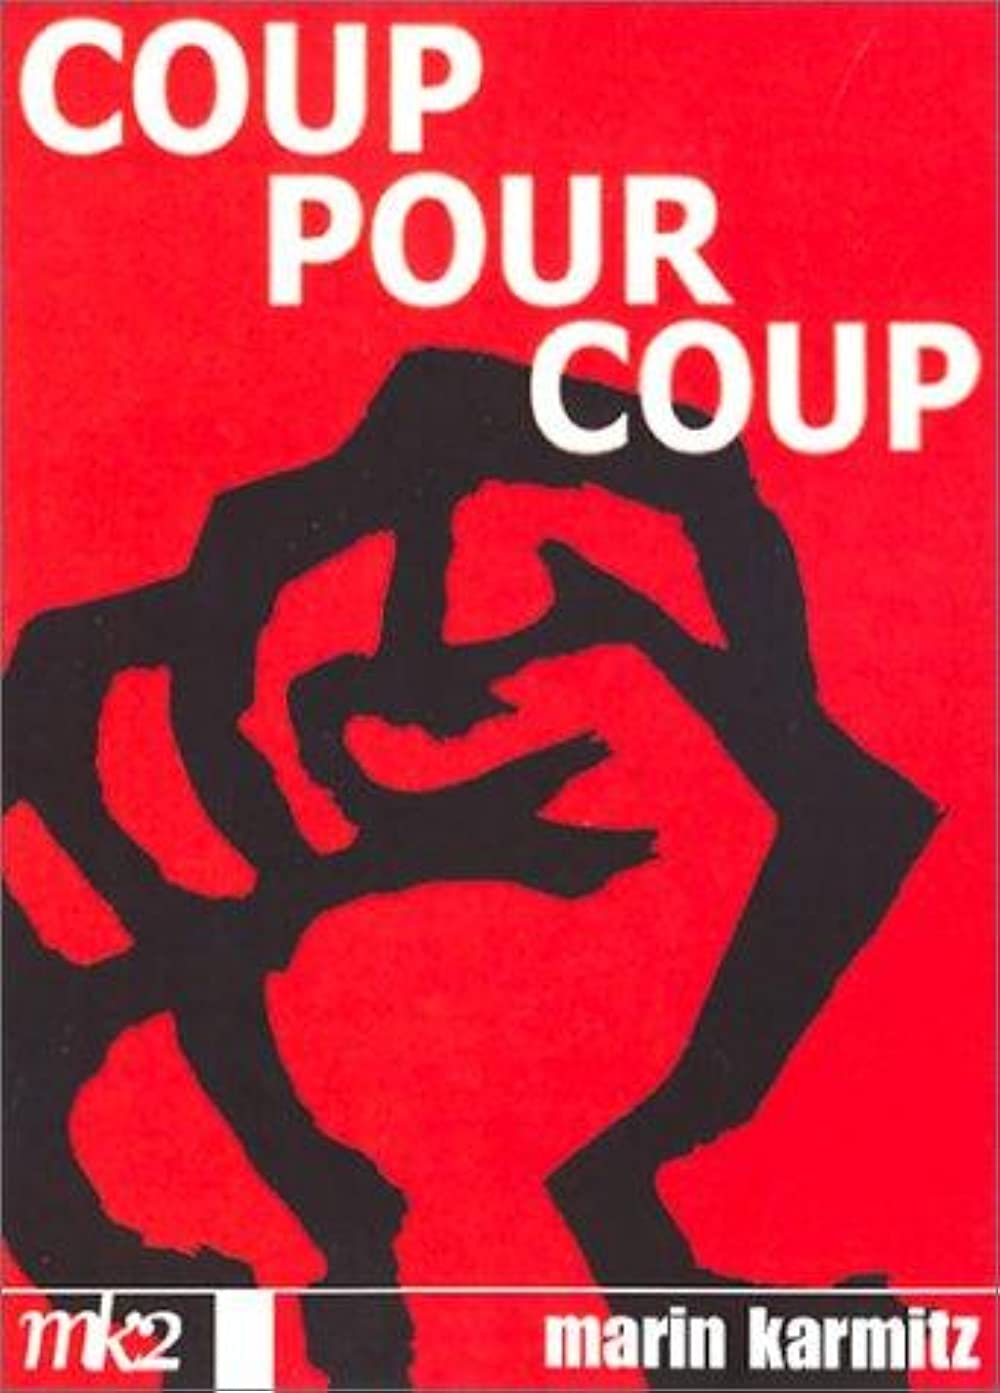 دانلود فیلم Coup pour coup 1972